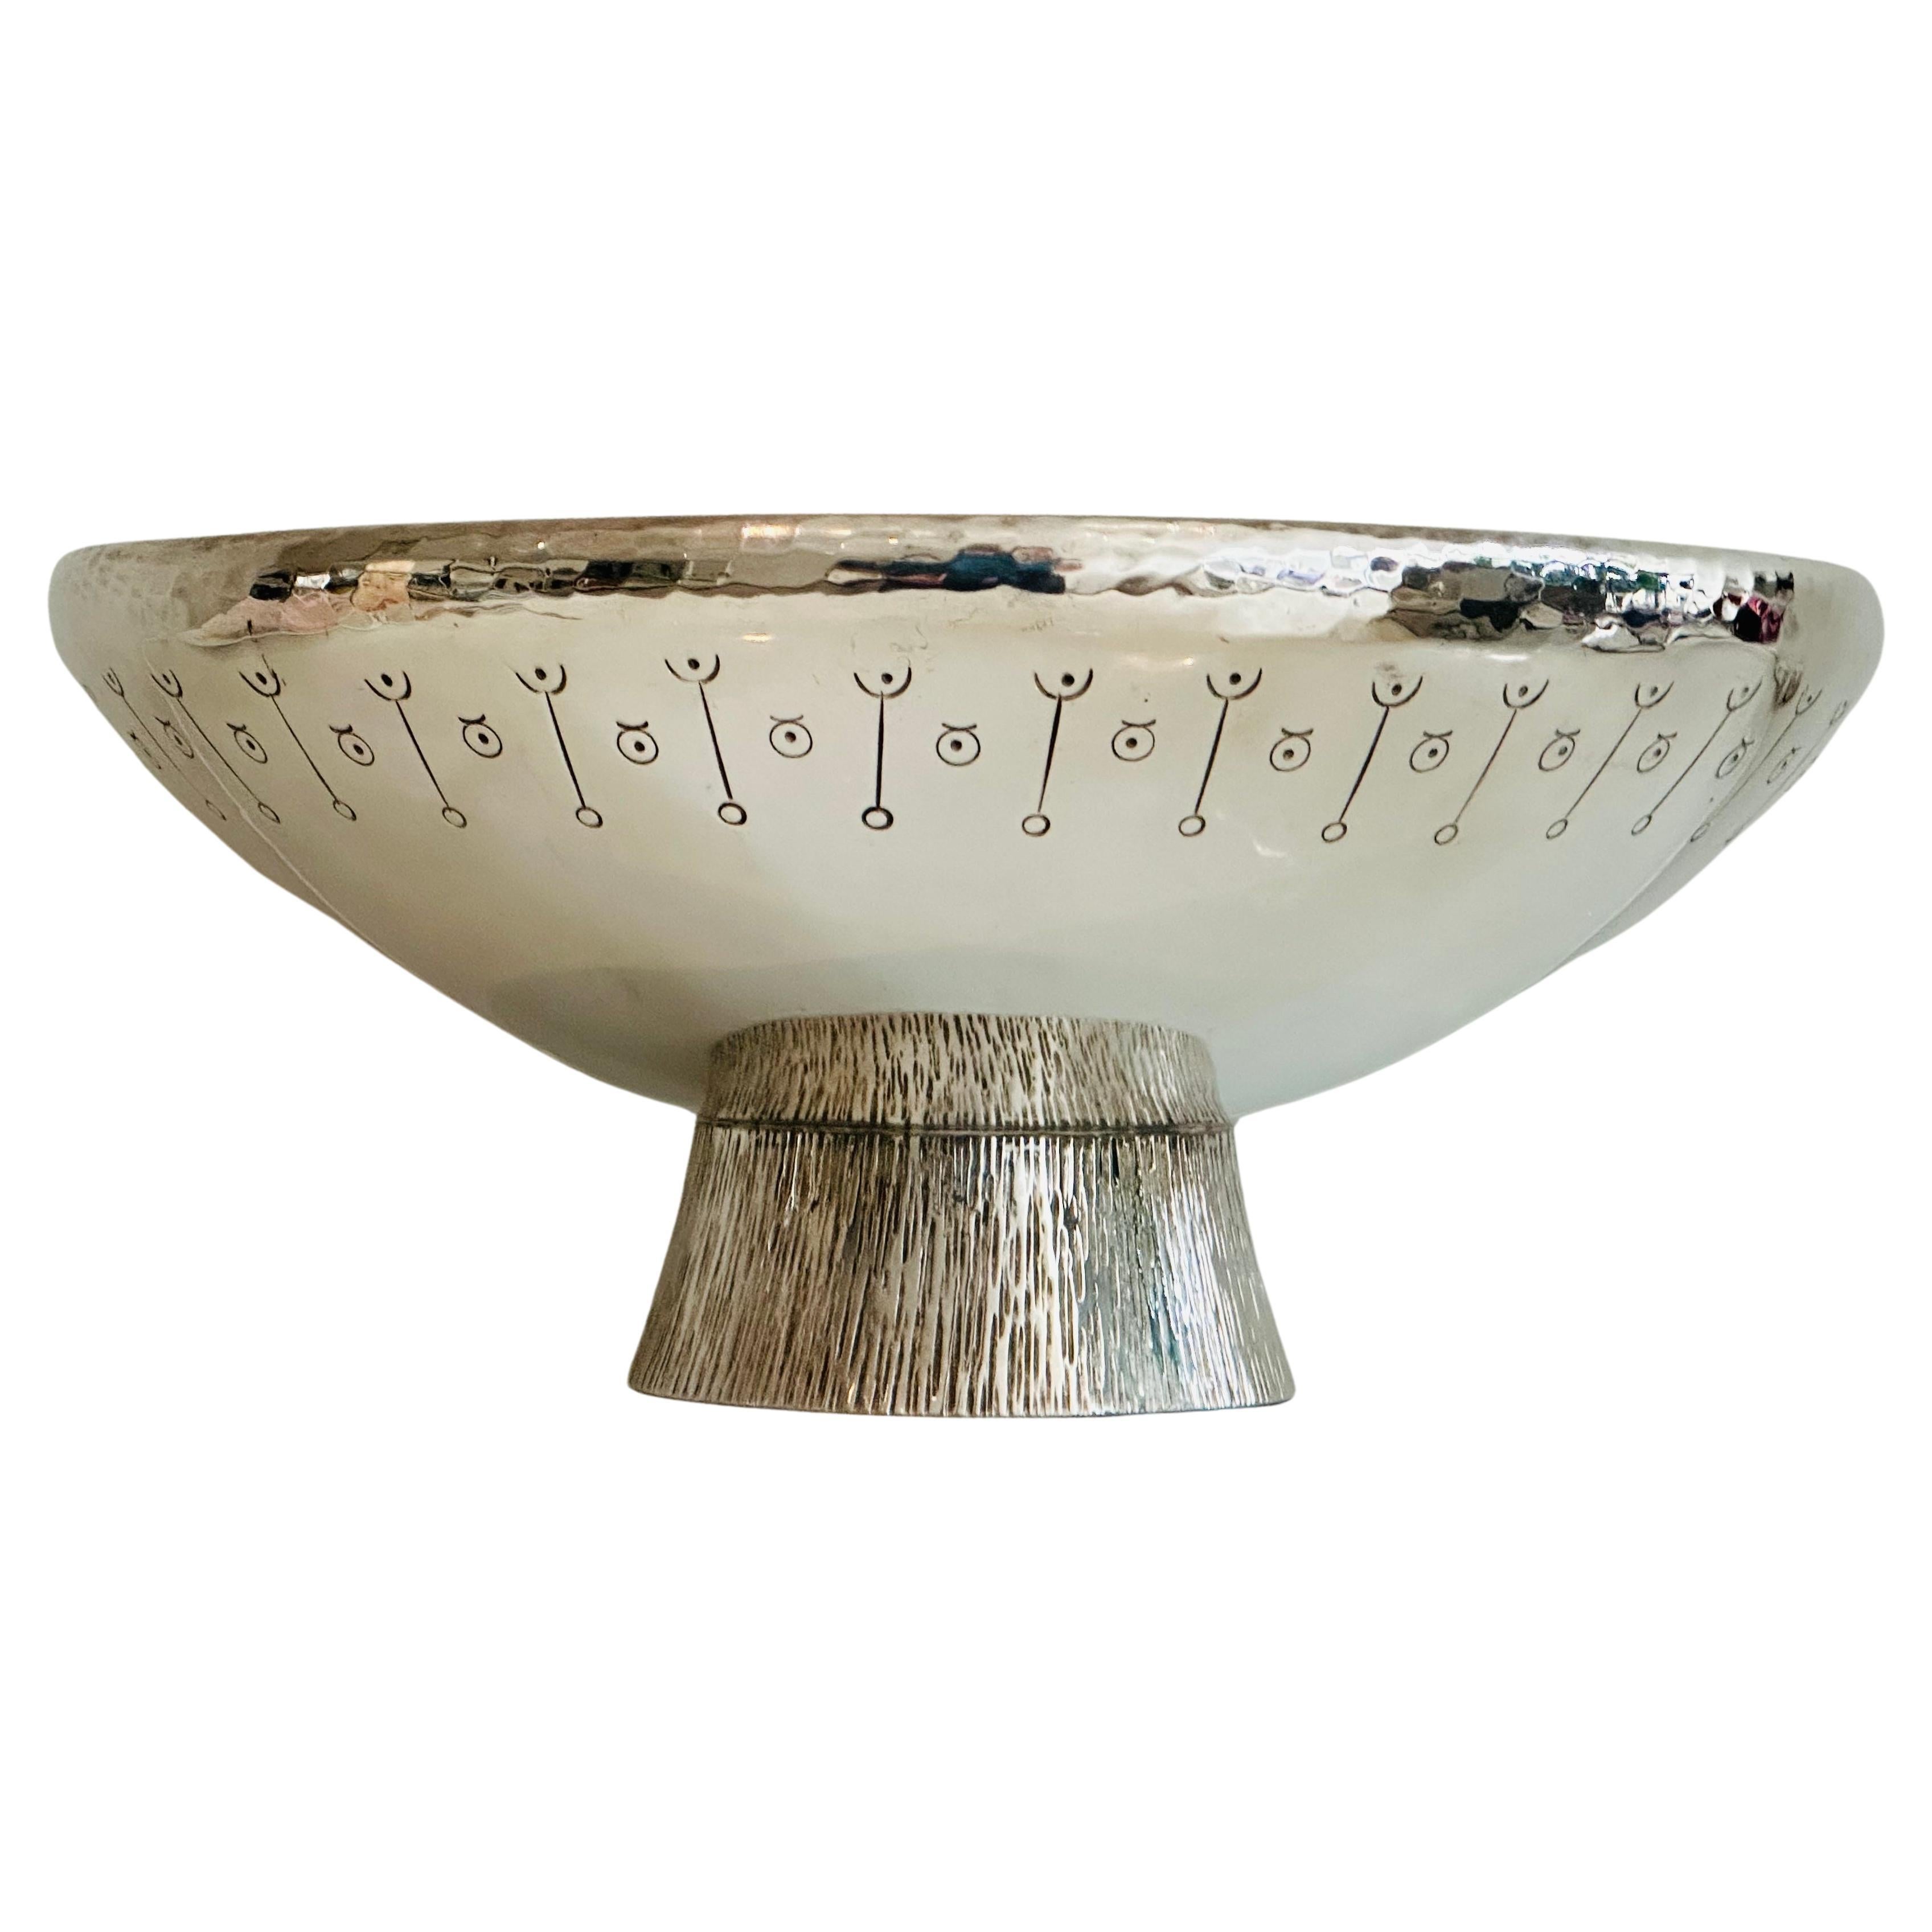 1980 English Silver Plated Decorative Hand-Hammered Serving or Display Bowl (bol de service ou de présentation)